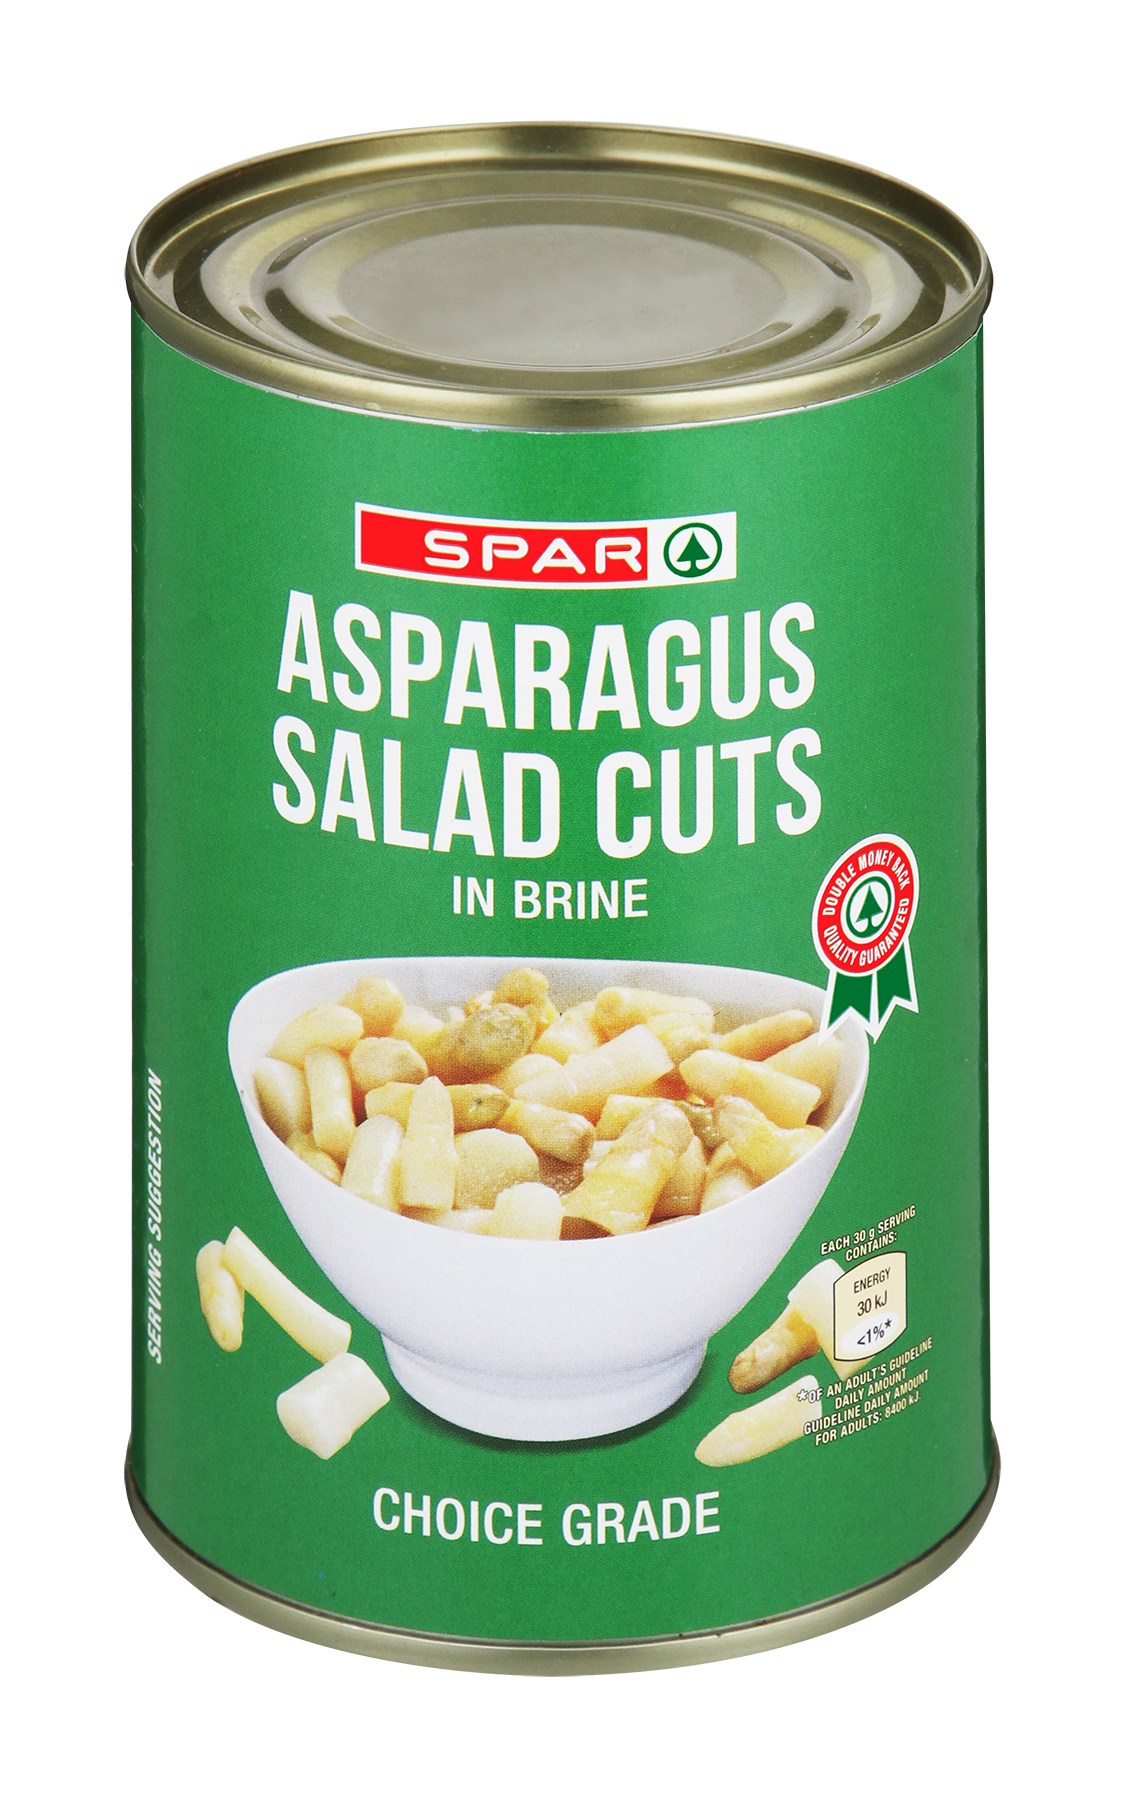 asparagus salad cuts